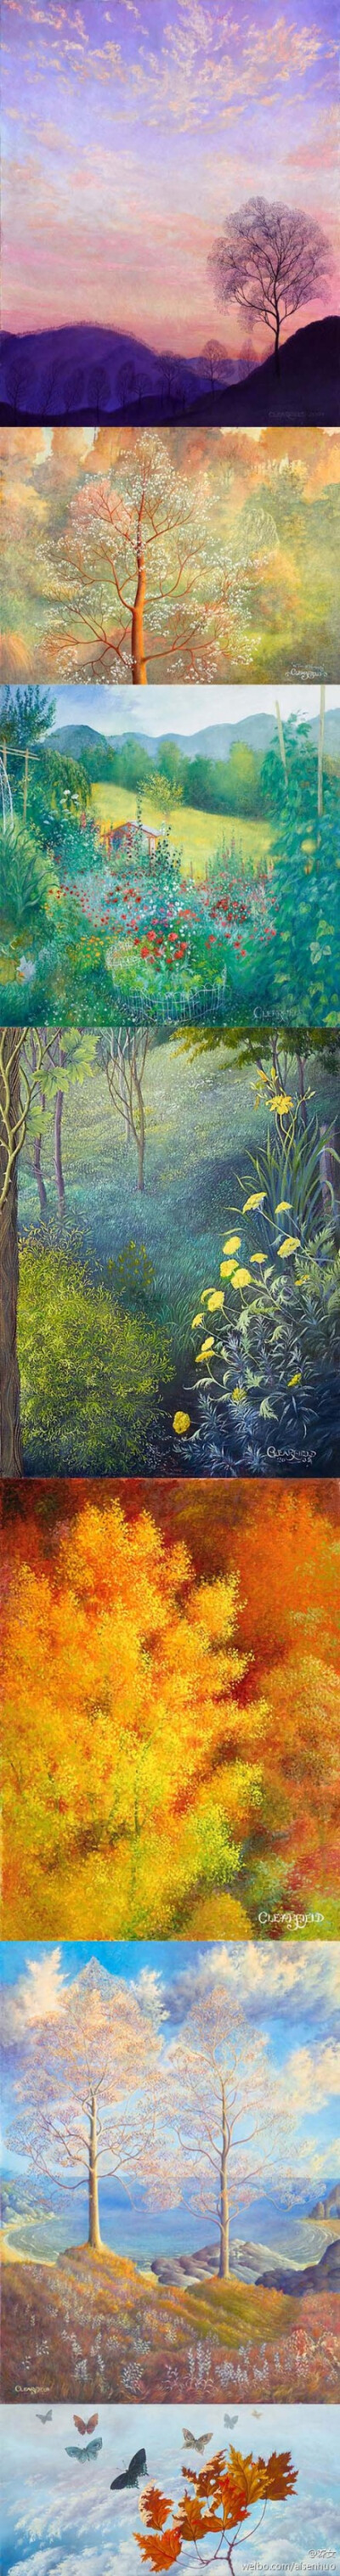 rachel clearfield风景画,他用画笔捕捉到了大自然最美的颜色